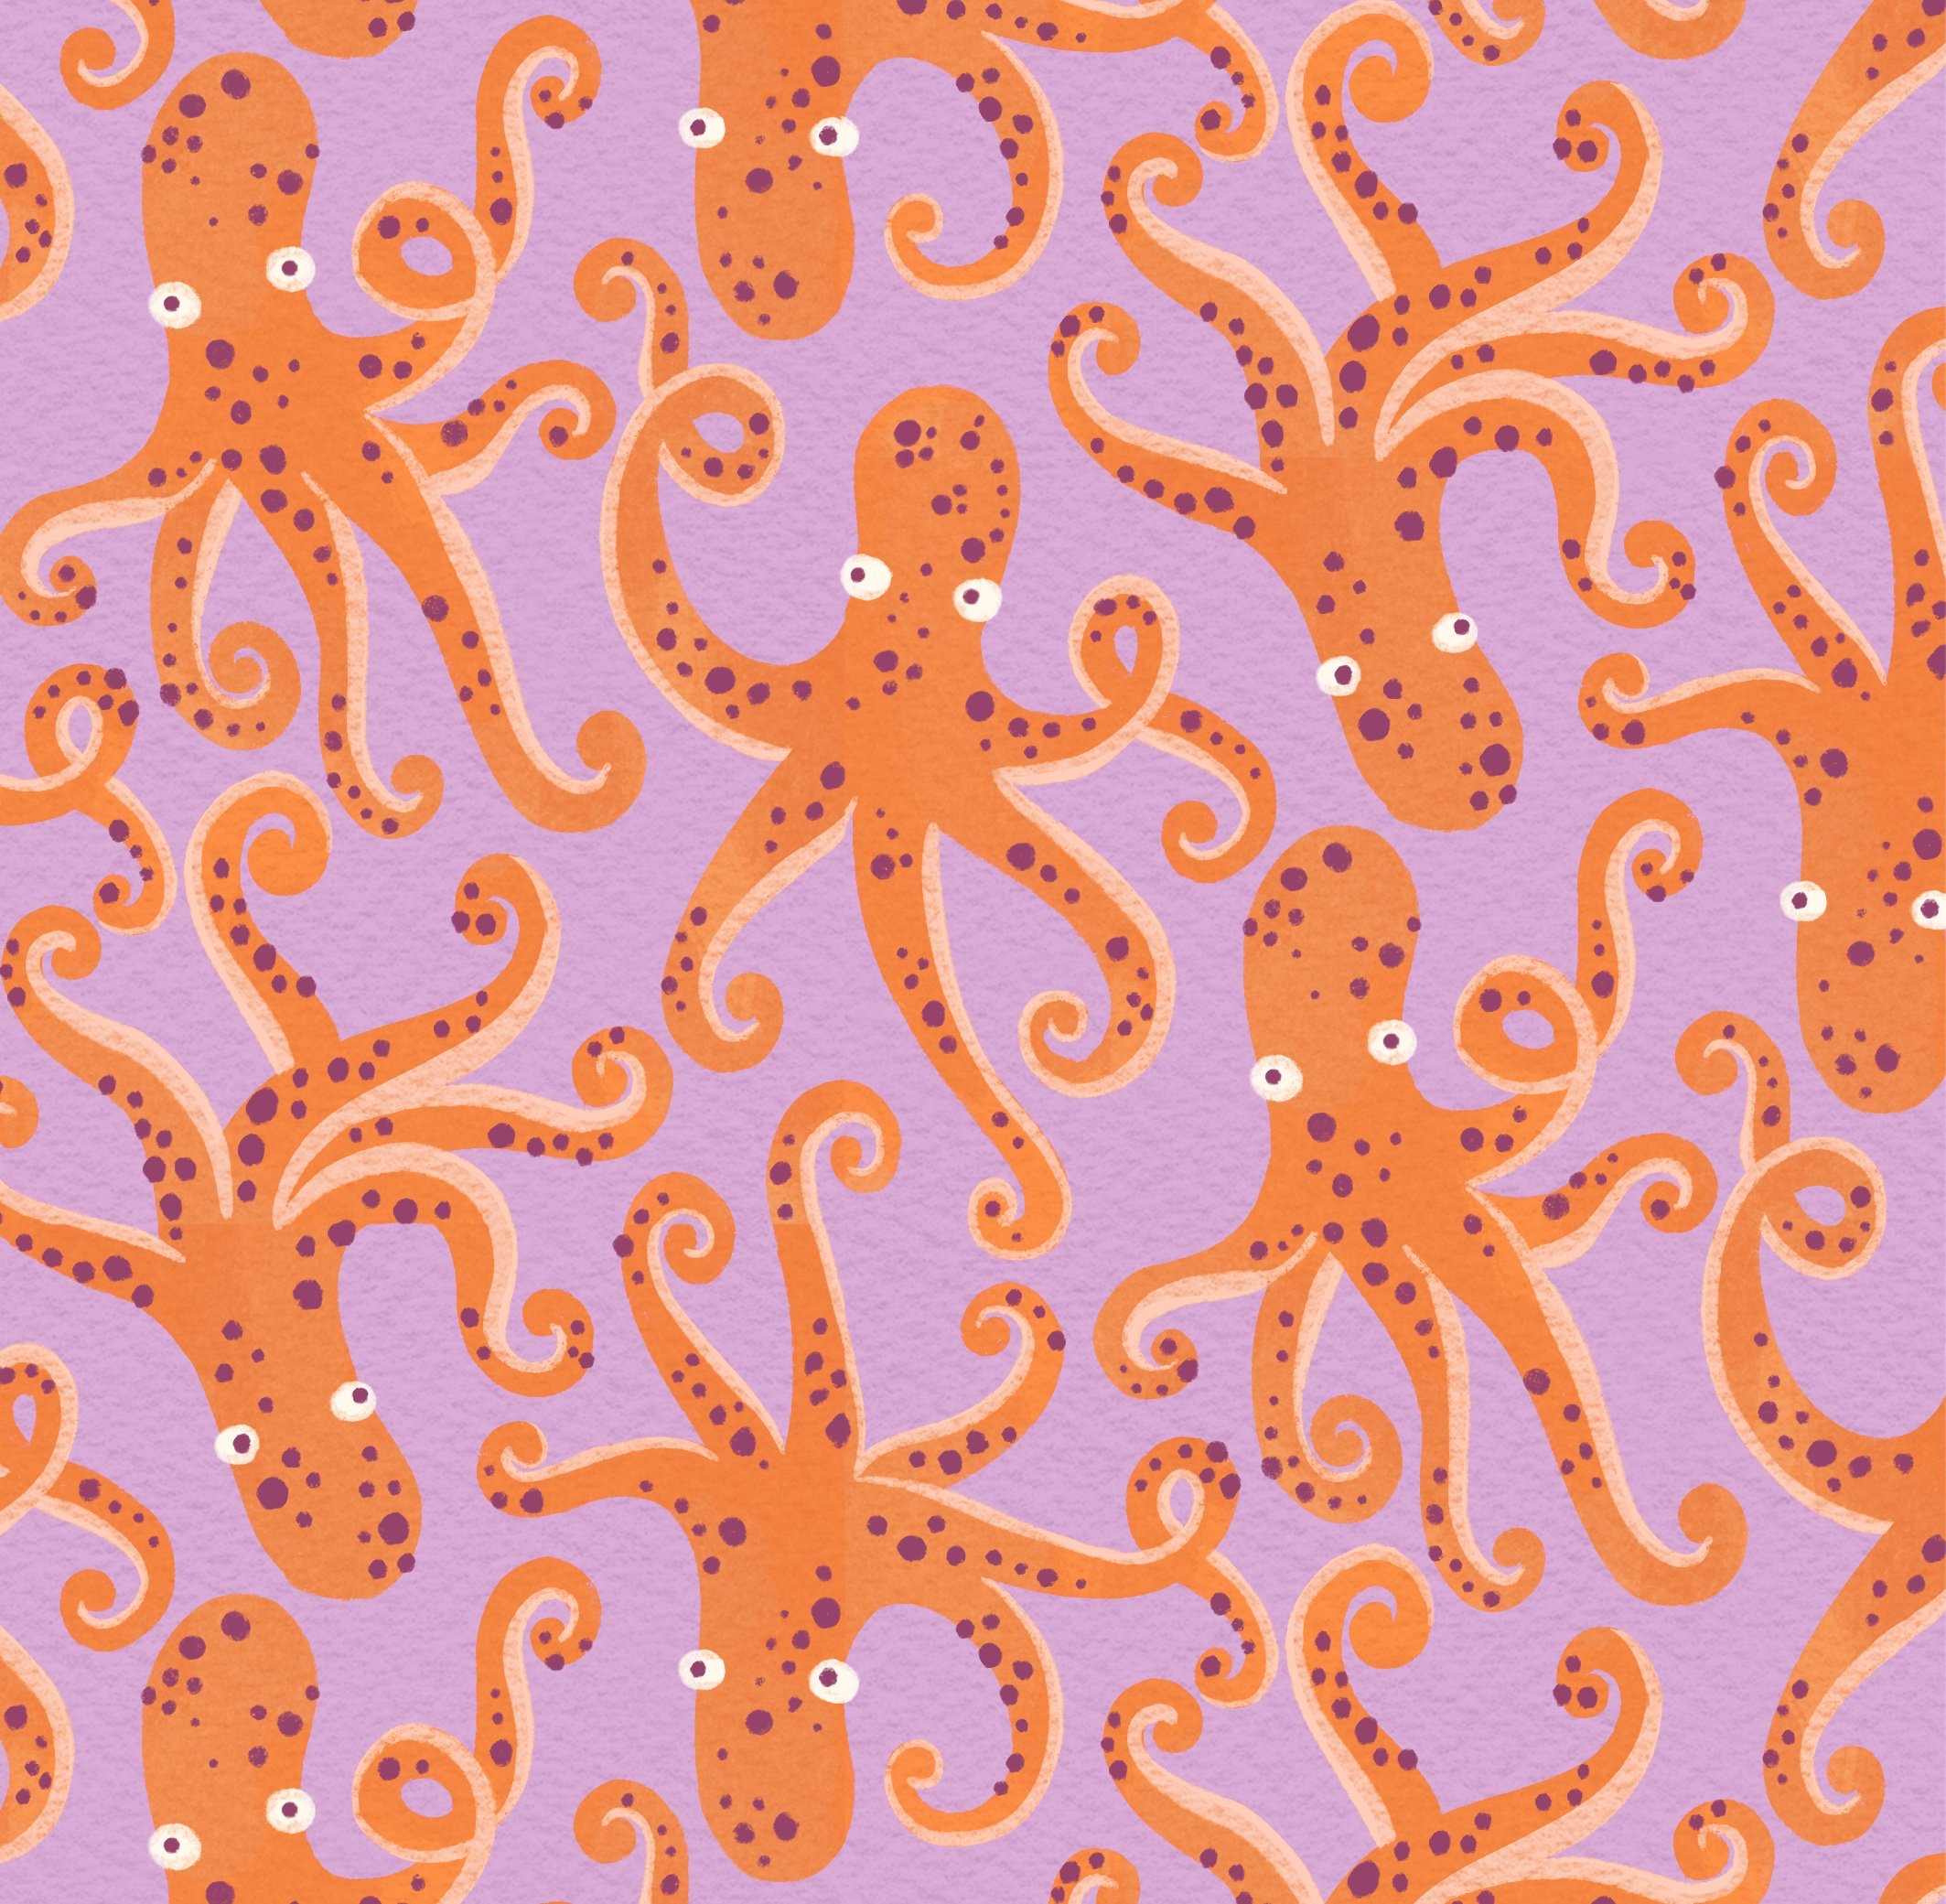 Octopus Square.jpeg